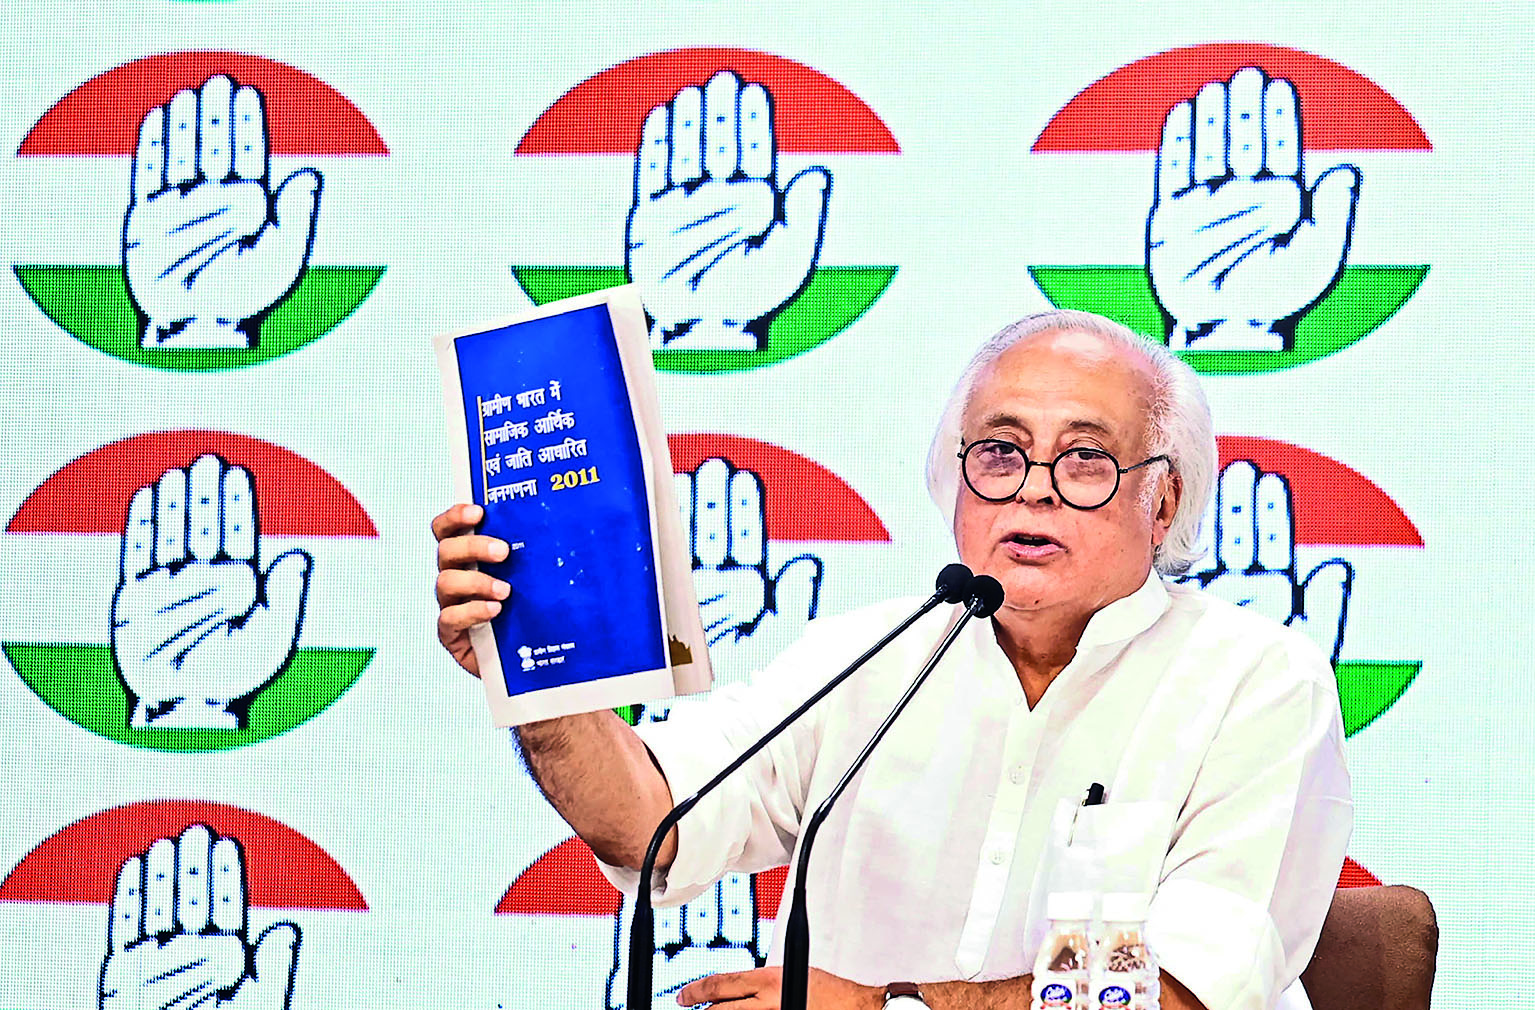 ‘Modi’s steadfast adherence to lies’: Congress slams PM